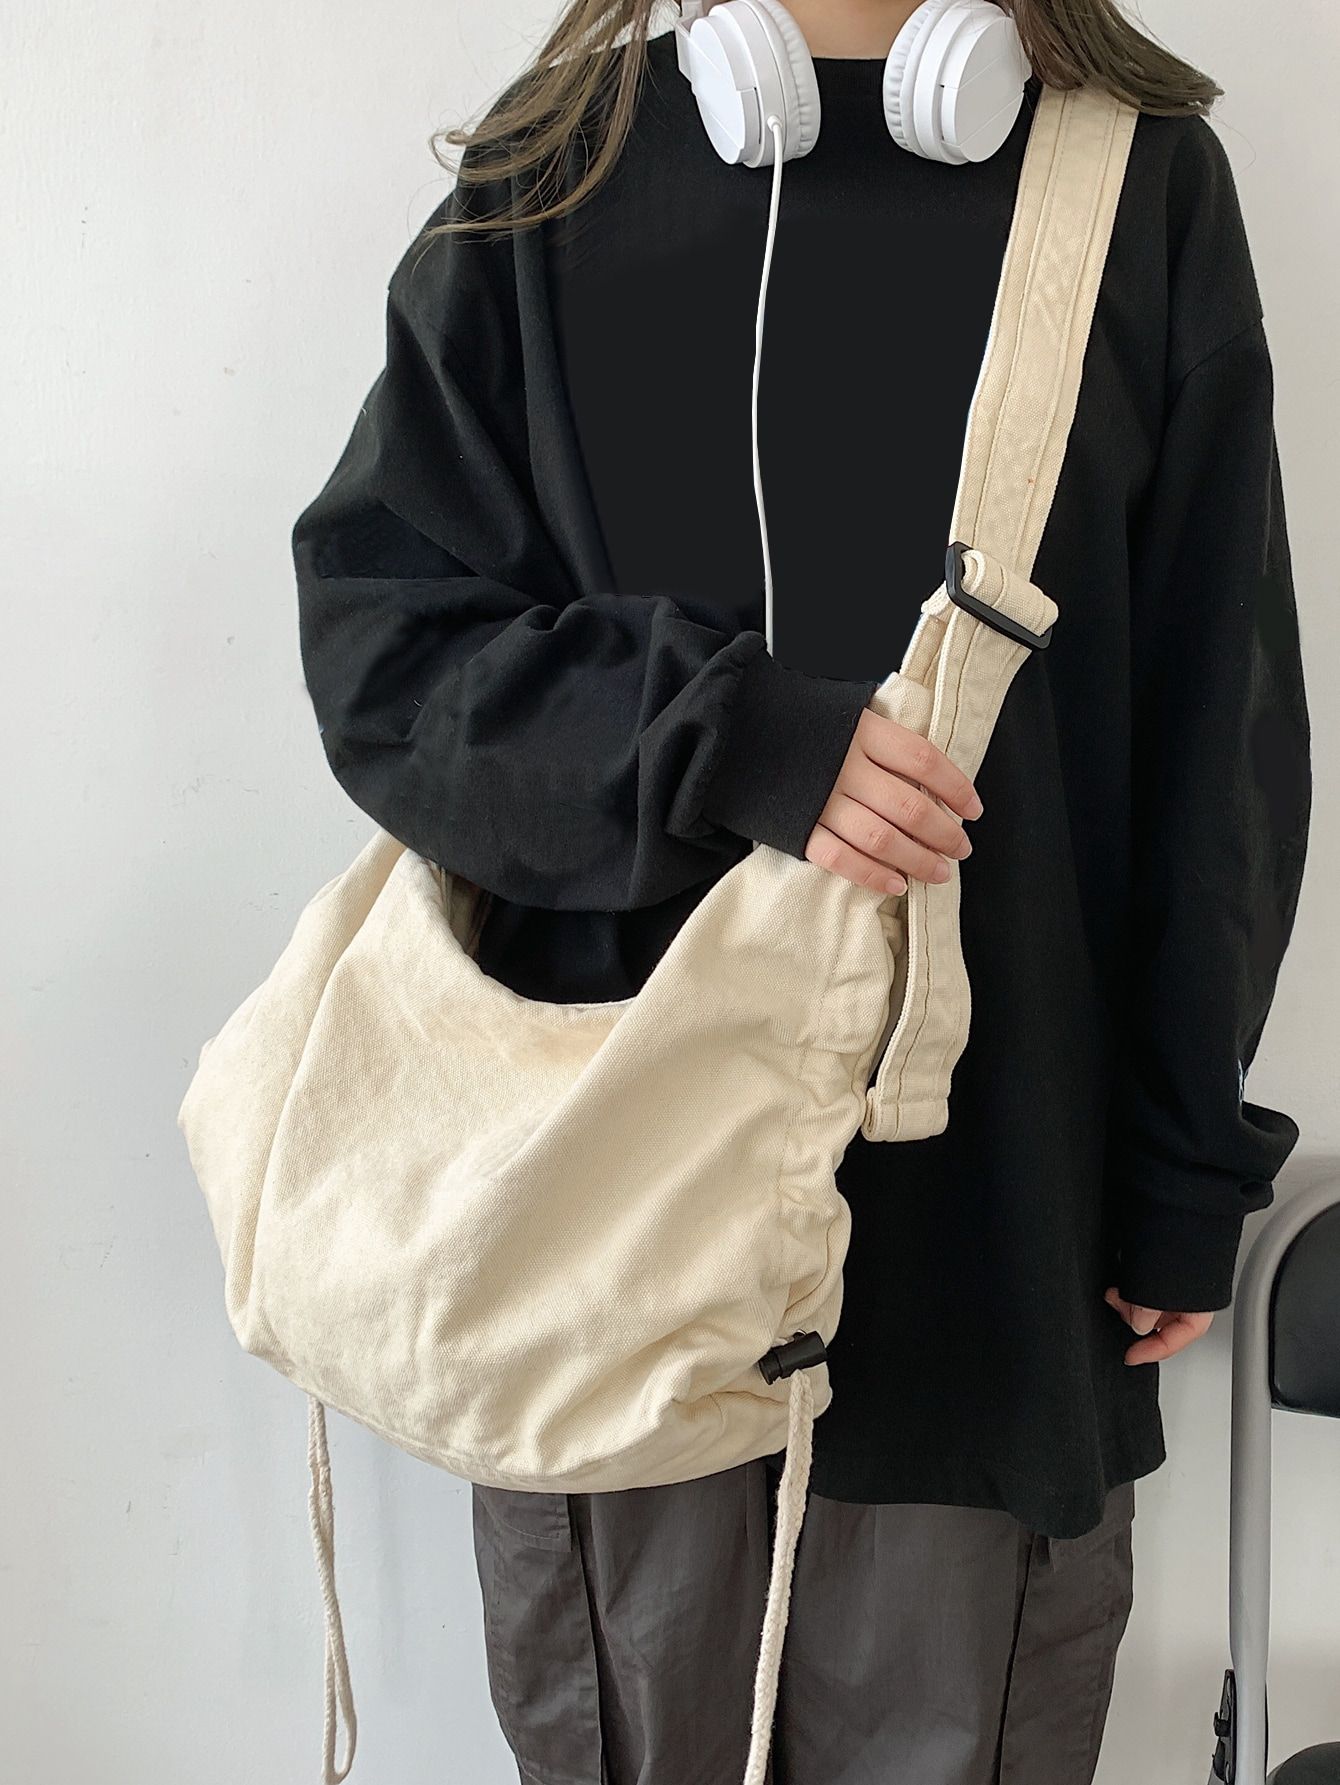 Make Stylish look and sunshine
personality with hobo bag